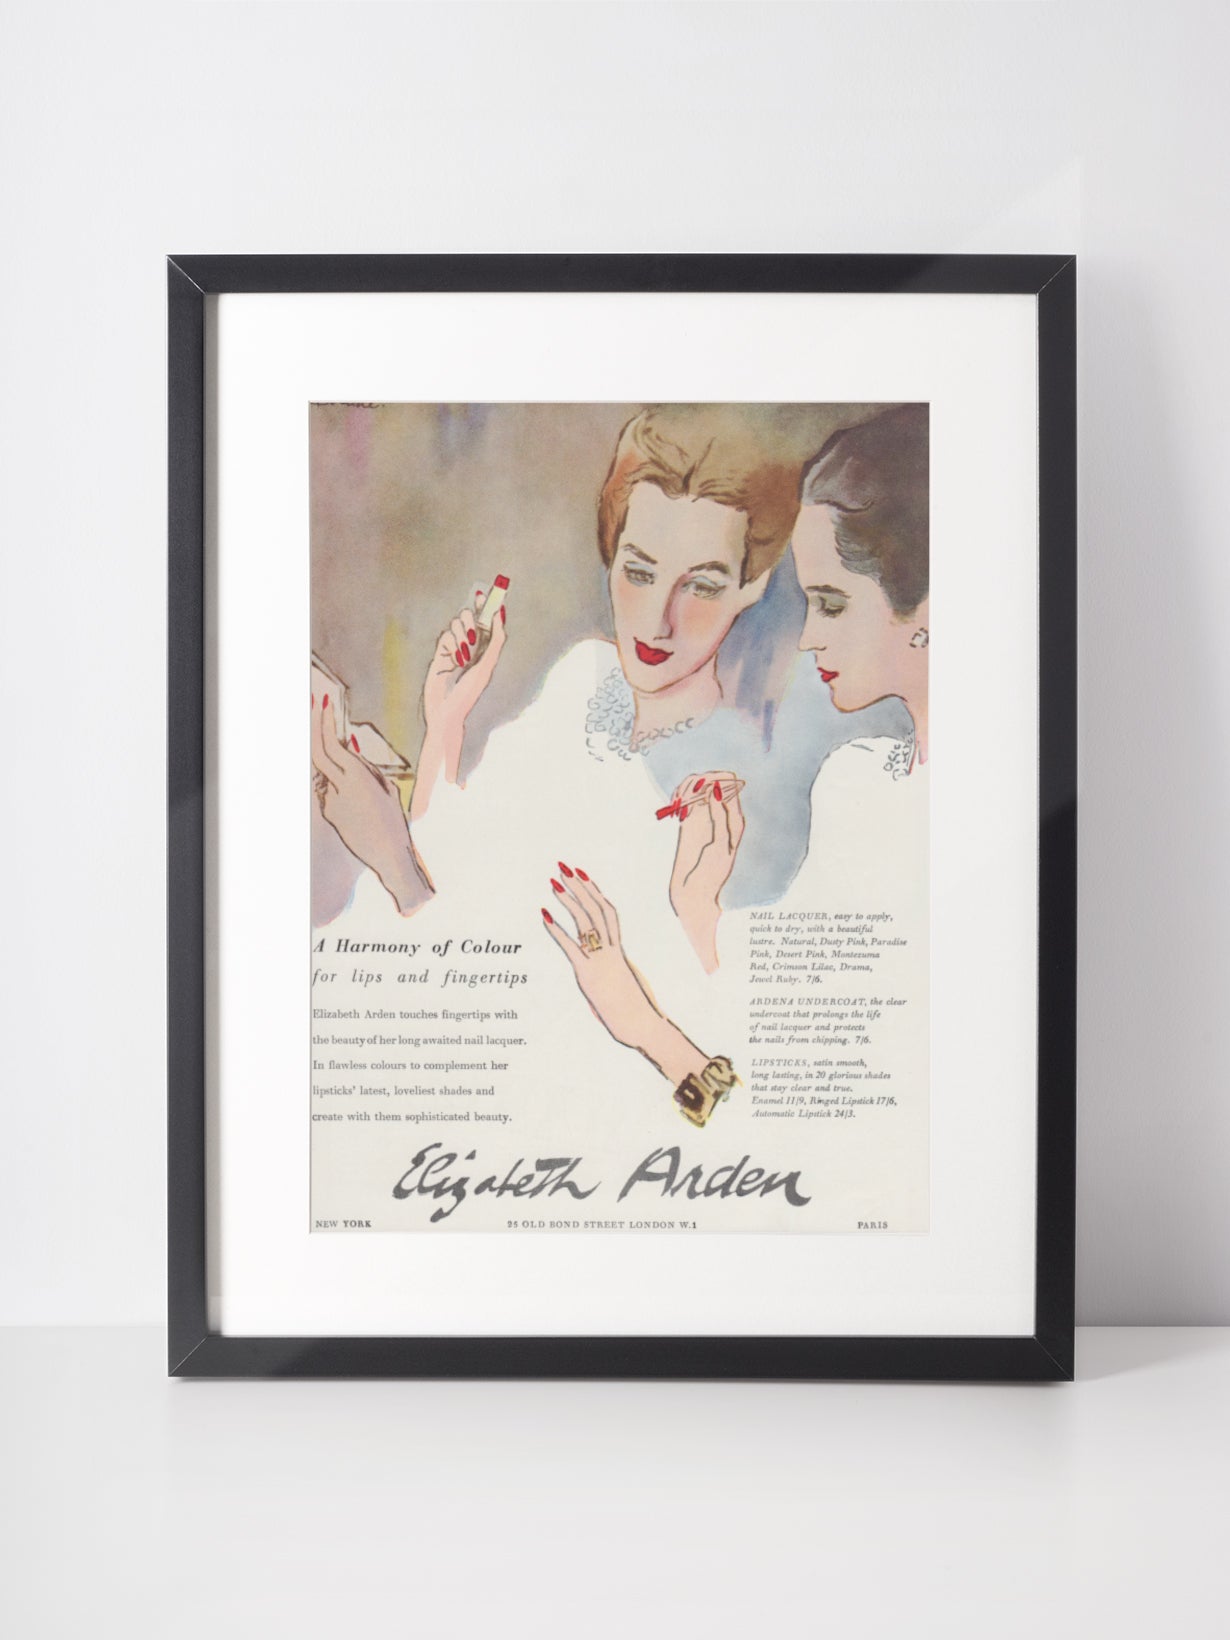 ELIZABETH ARDEN 1949 Vintage Print Advertisement Beauty Cosmetics